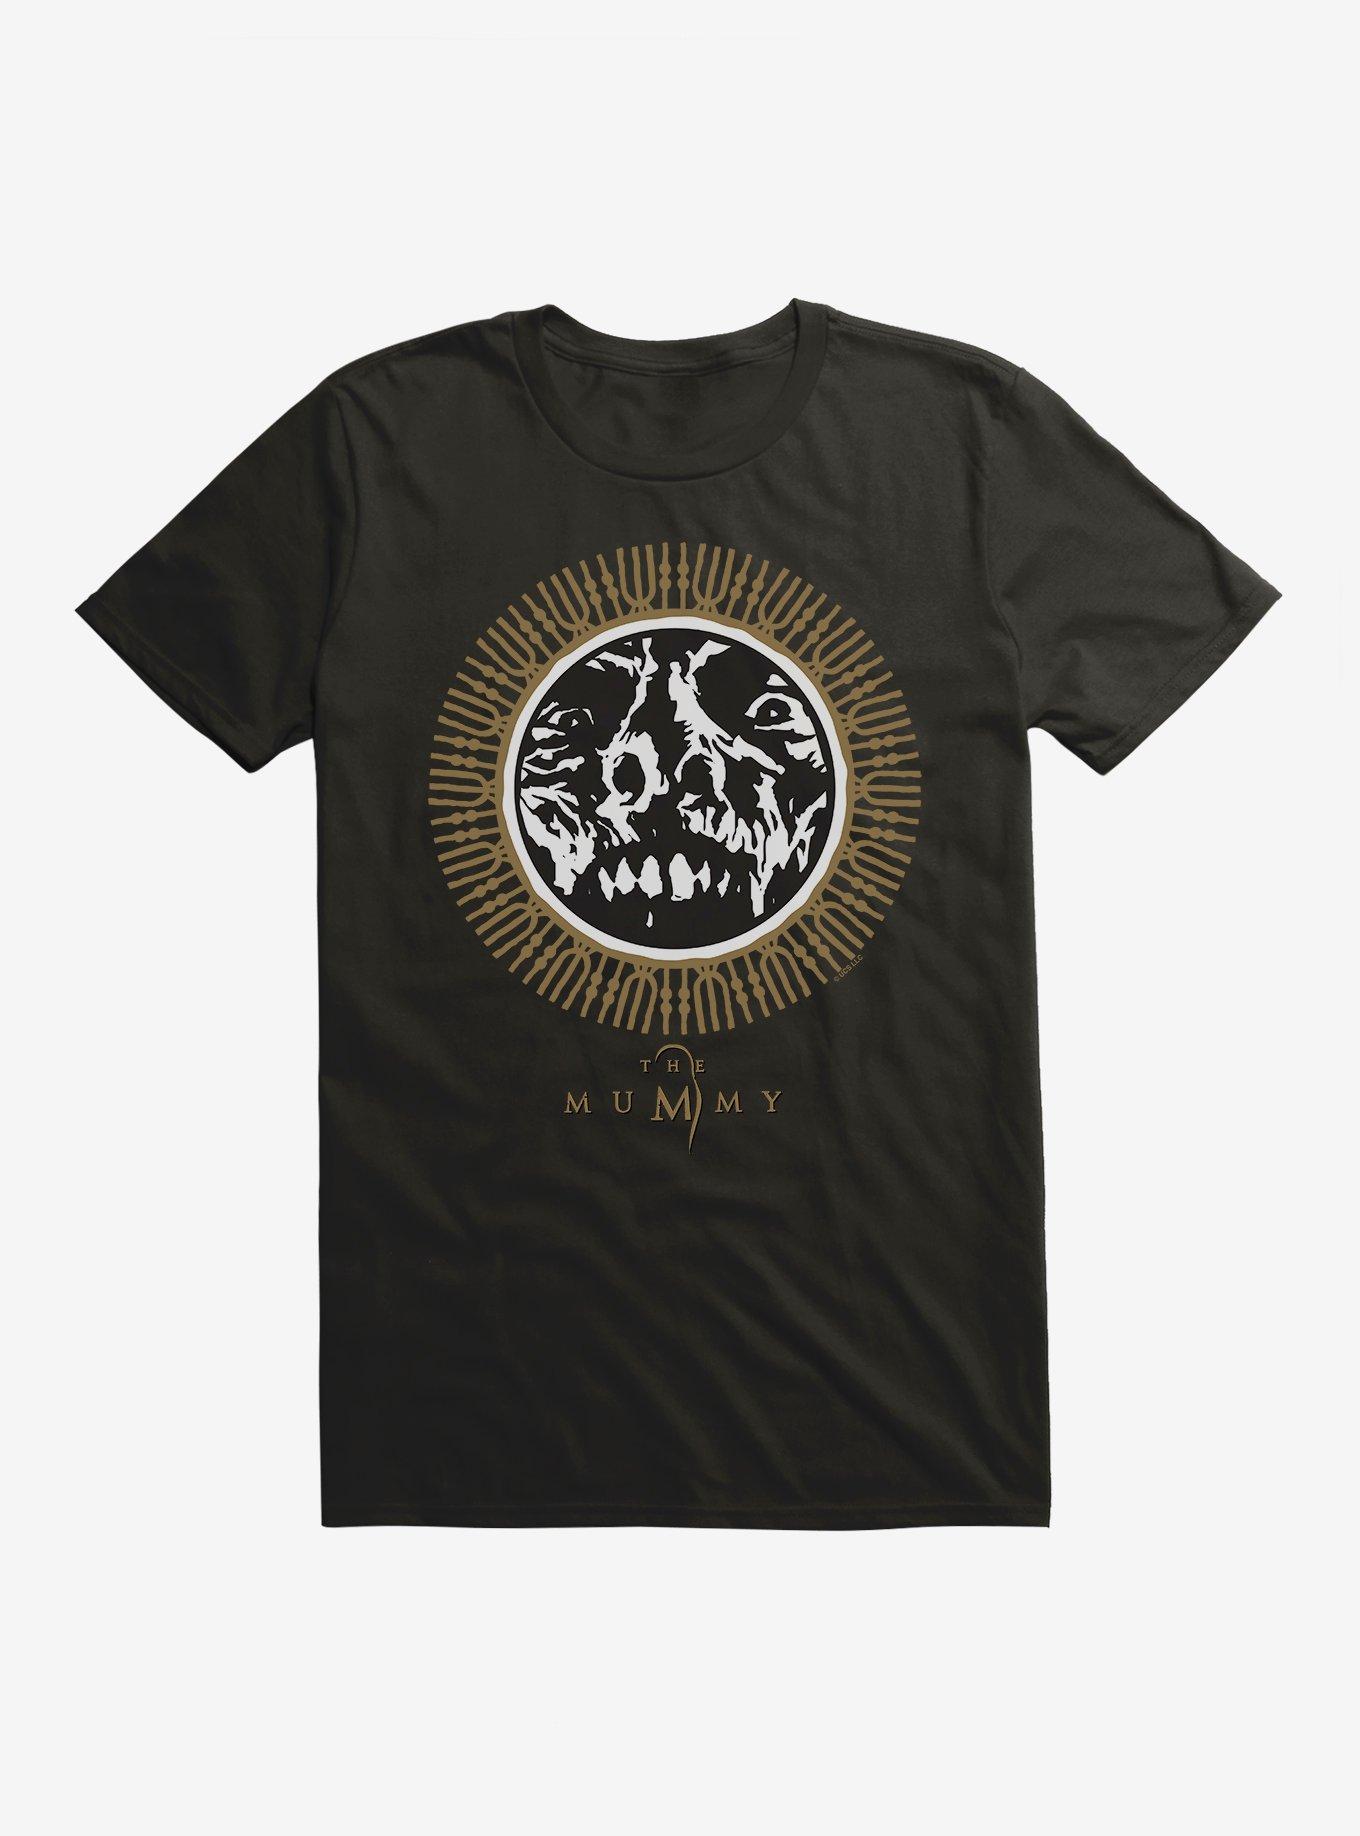 The Mummy Circular Ornament T-Shirt